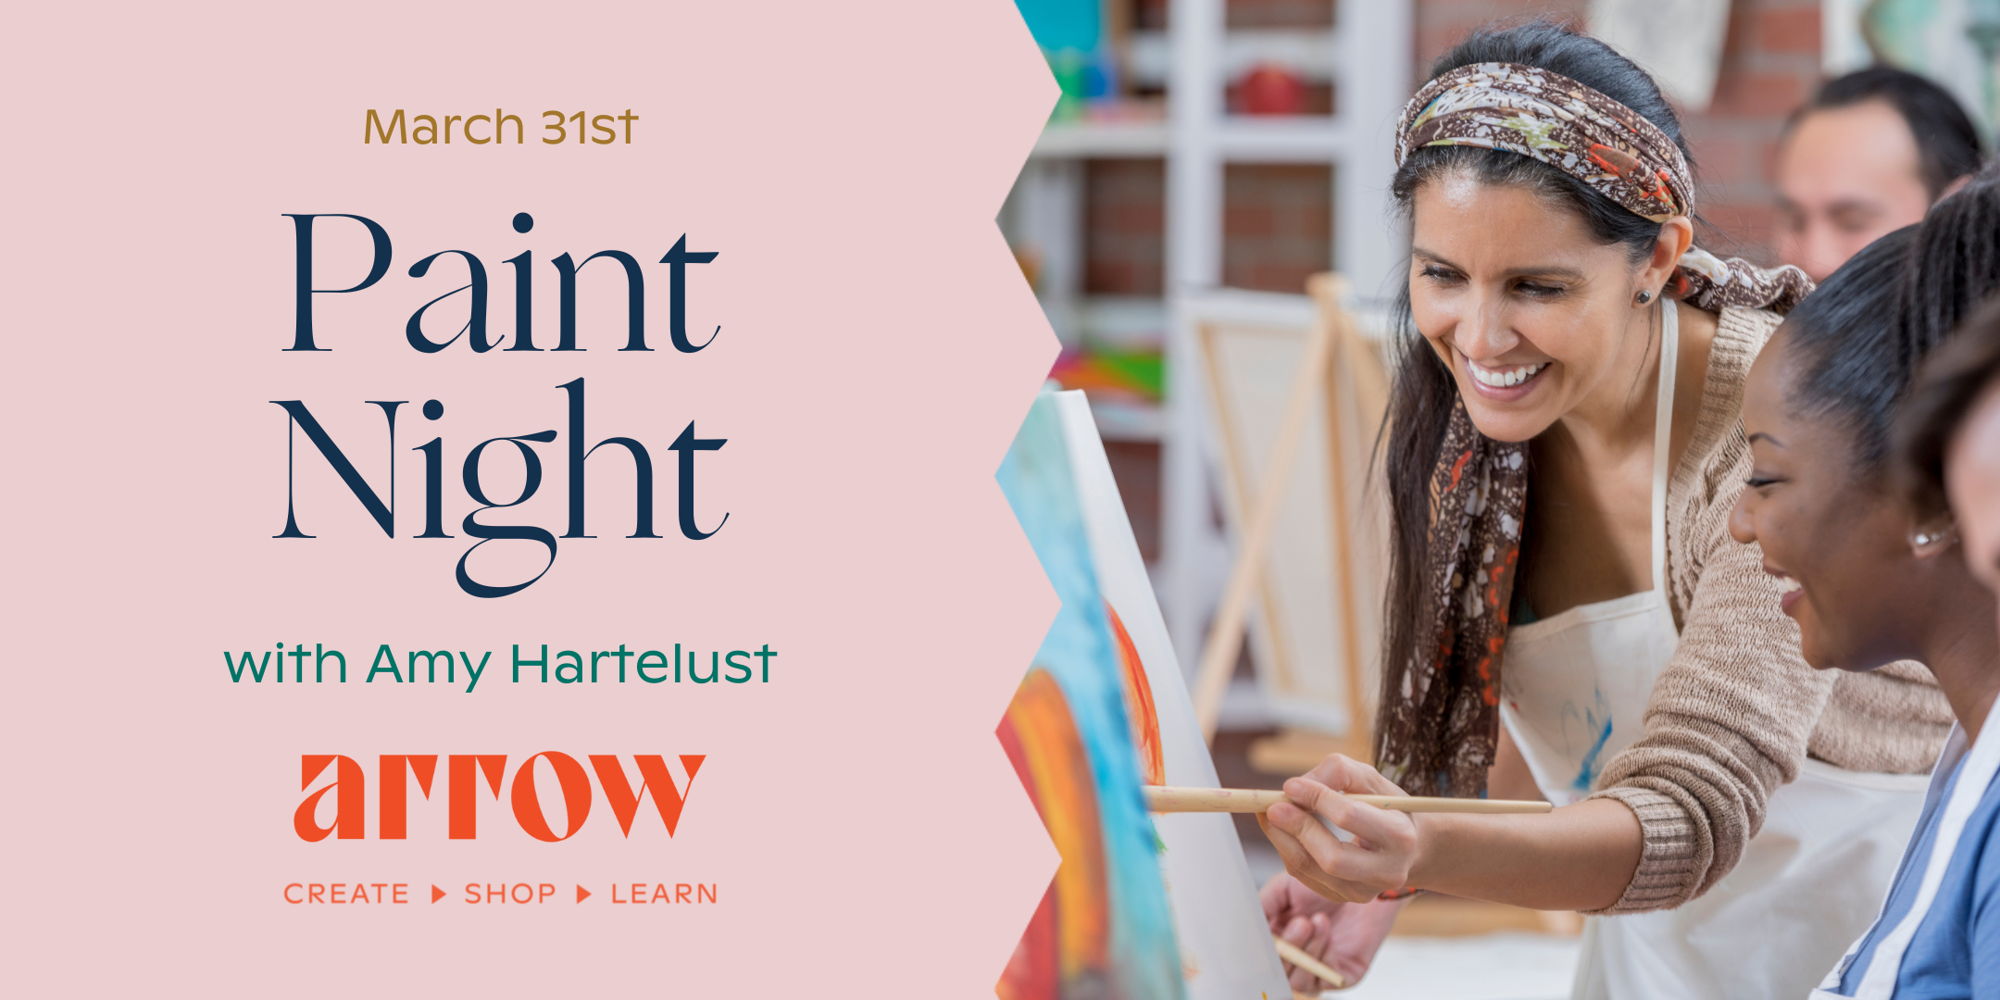 Paint Night with Amy Hartelust promotional image